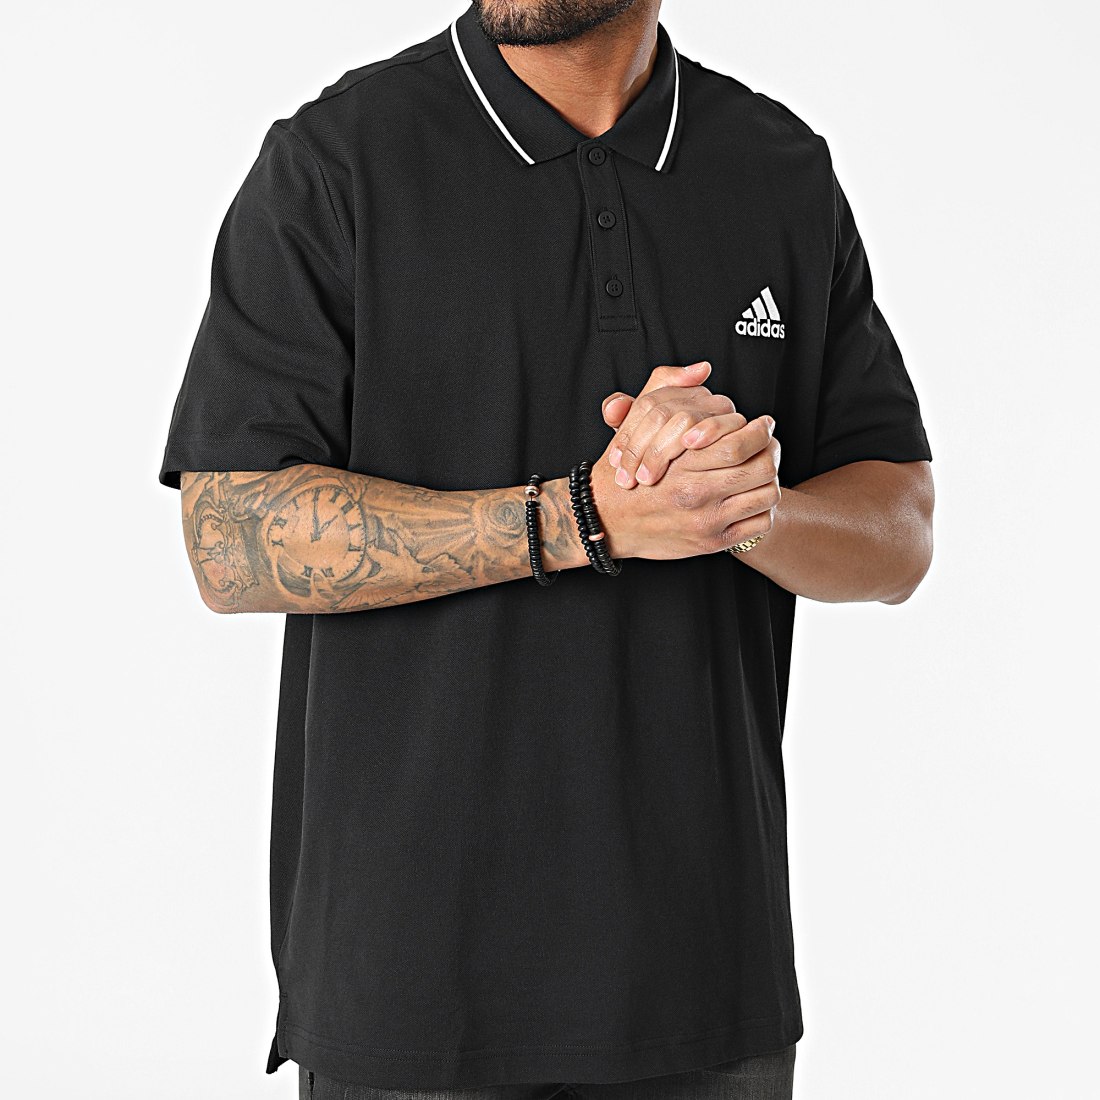 Polo Noir Aeroready Essentials Small Logo Homme Adidas au Maroc